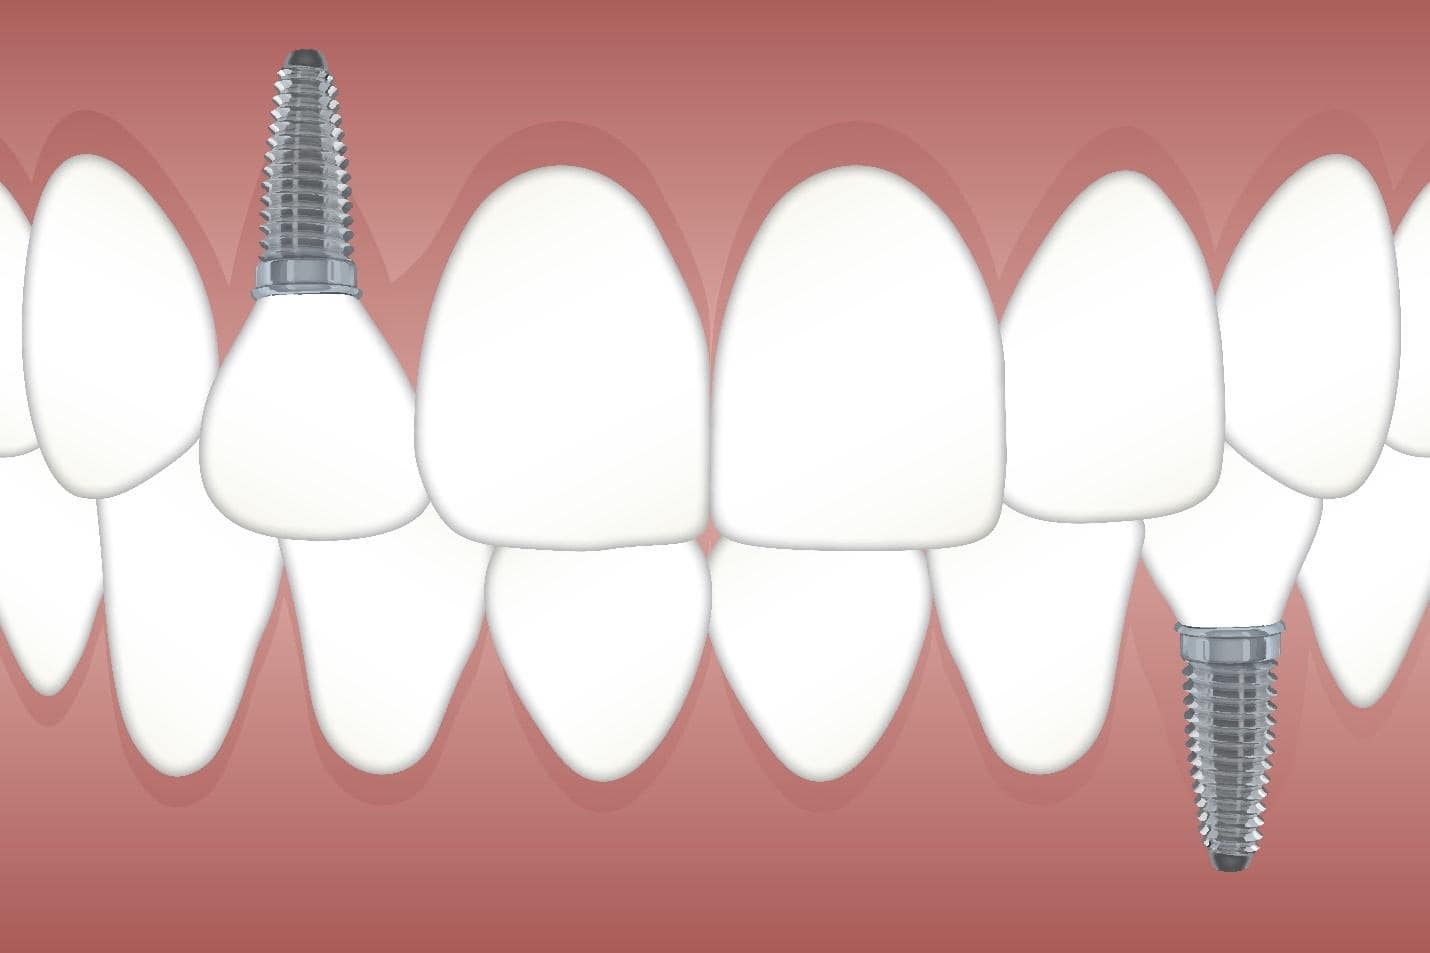 A-Dental Center - dental implant procedure